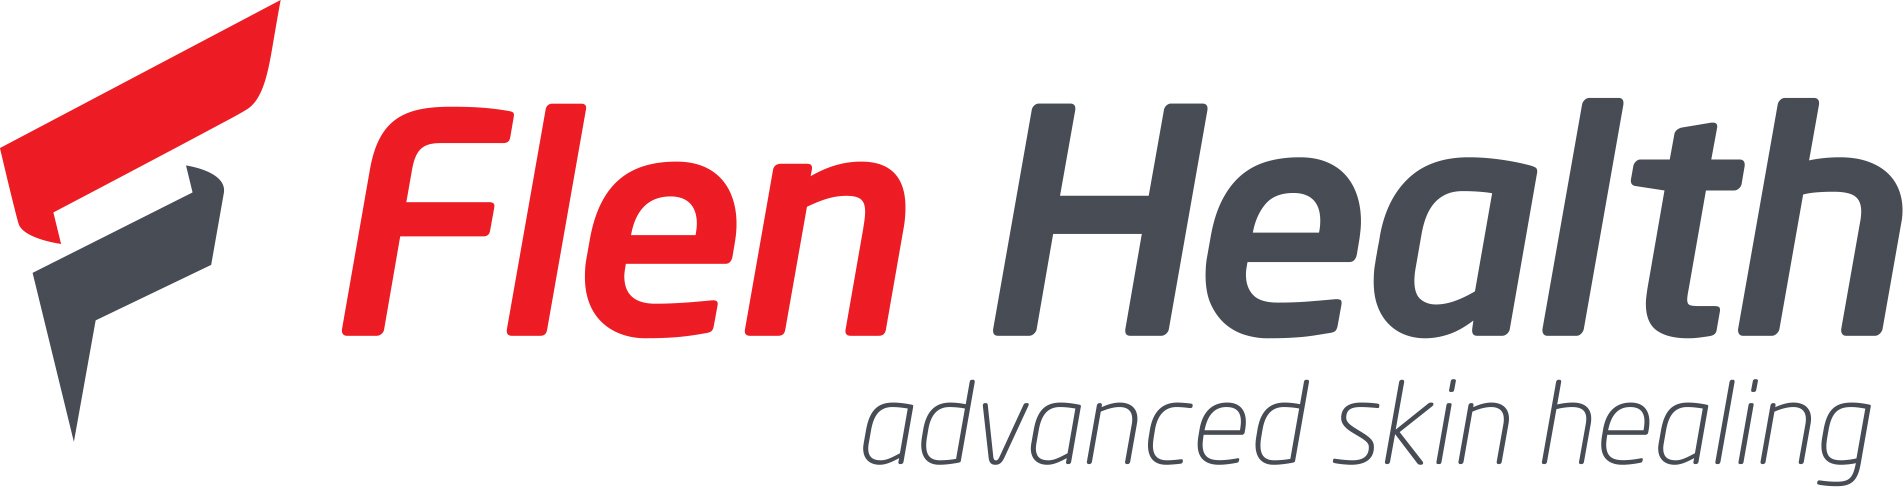 Flen Health logo with baseline CMYK cut.jpg